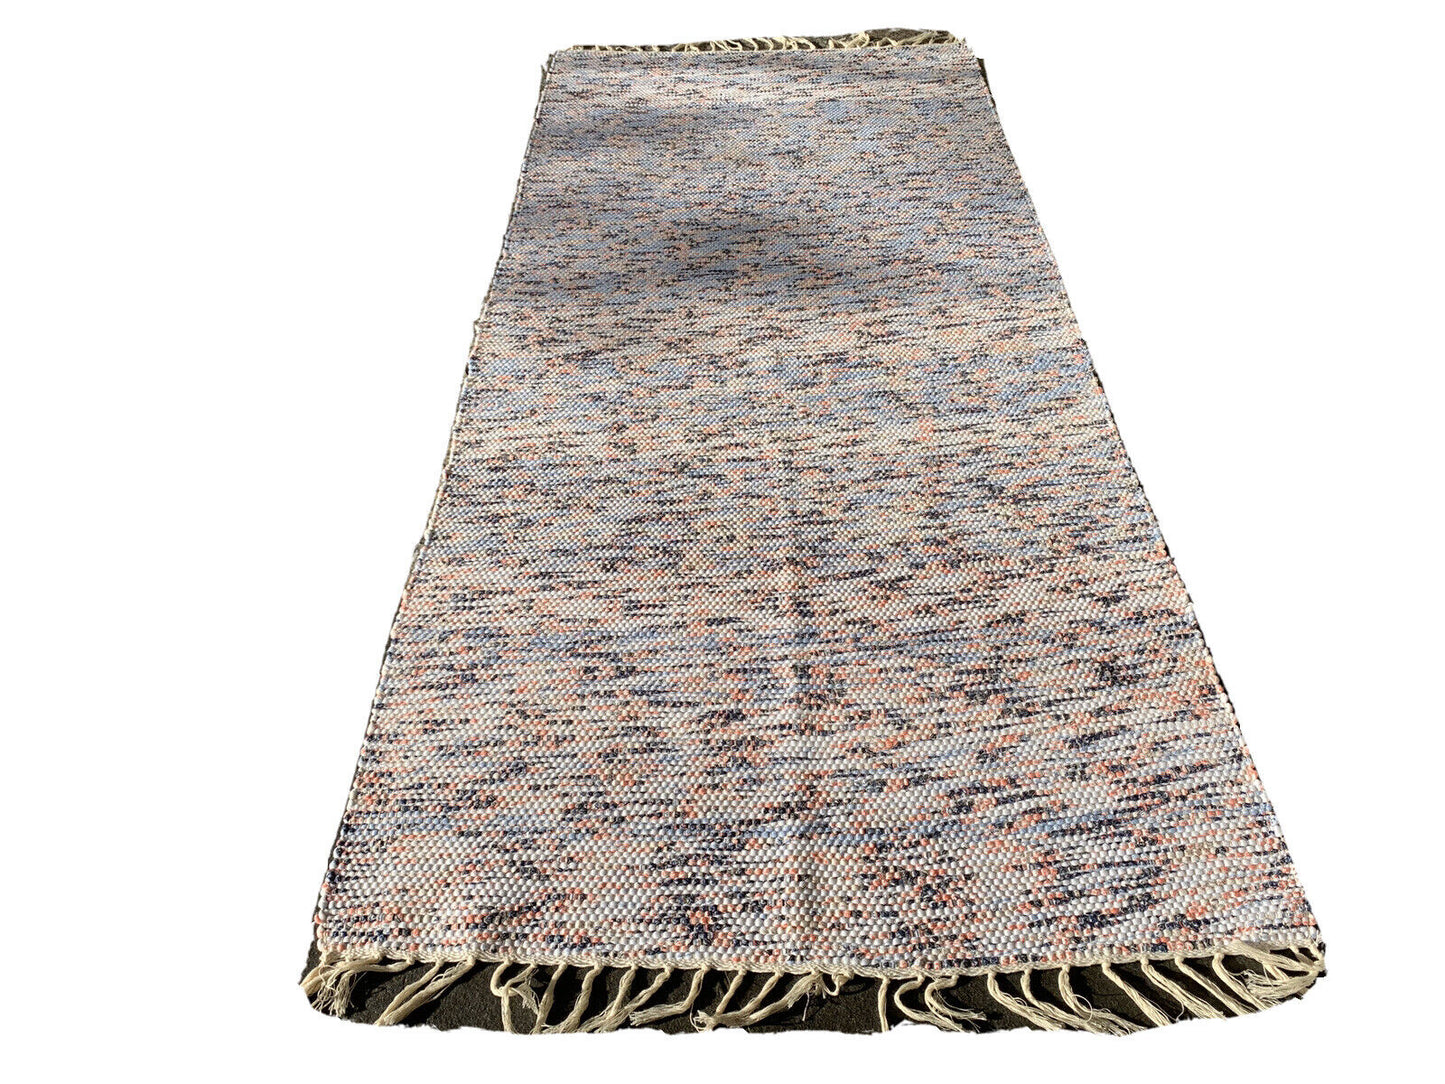 Brand New Traditional Turkish Kilim Carpet, Vintage Kilim Runner 176X78 Cm